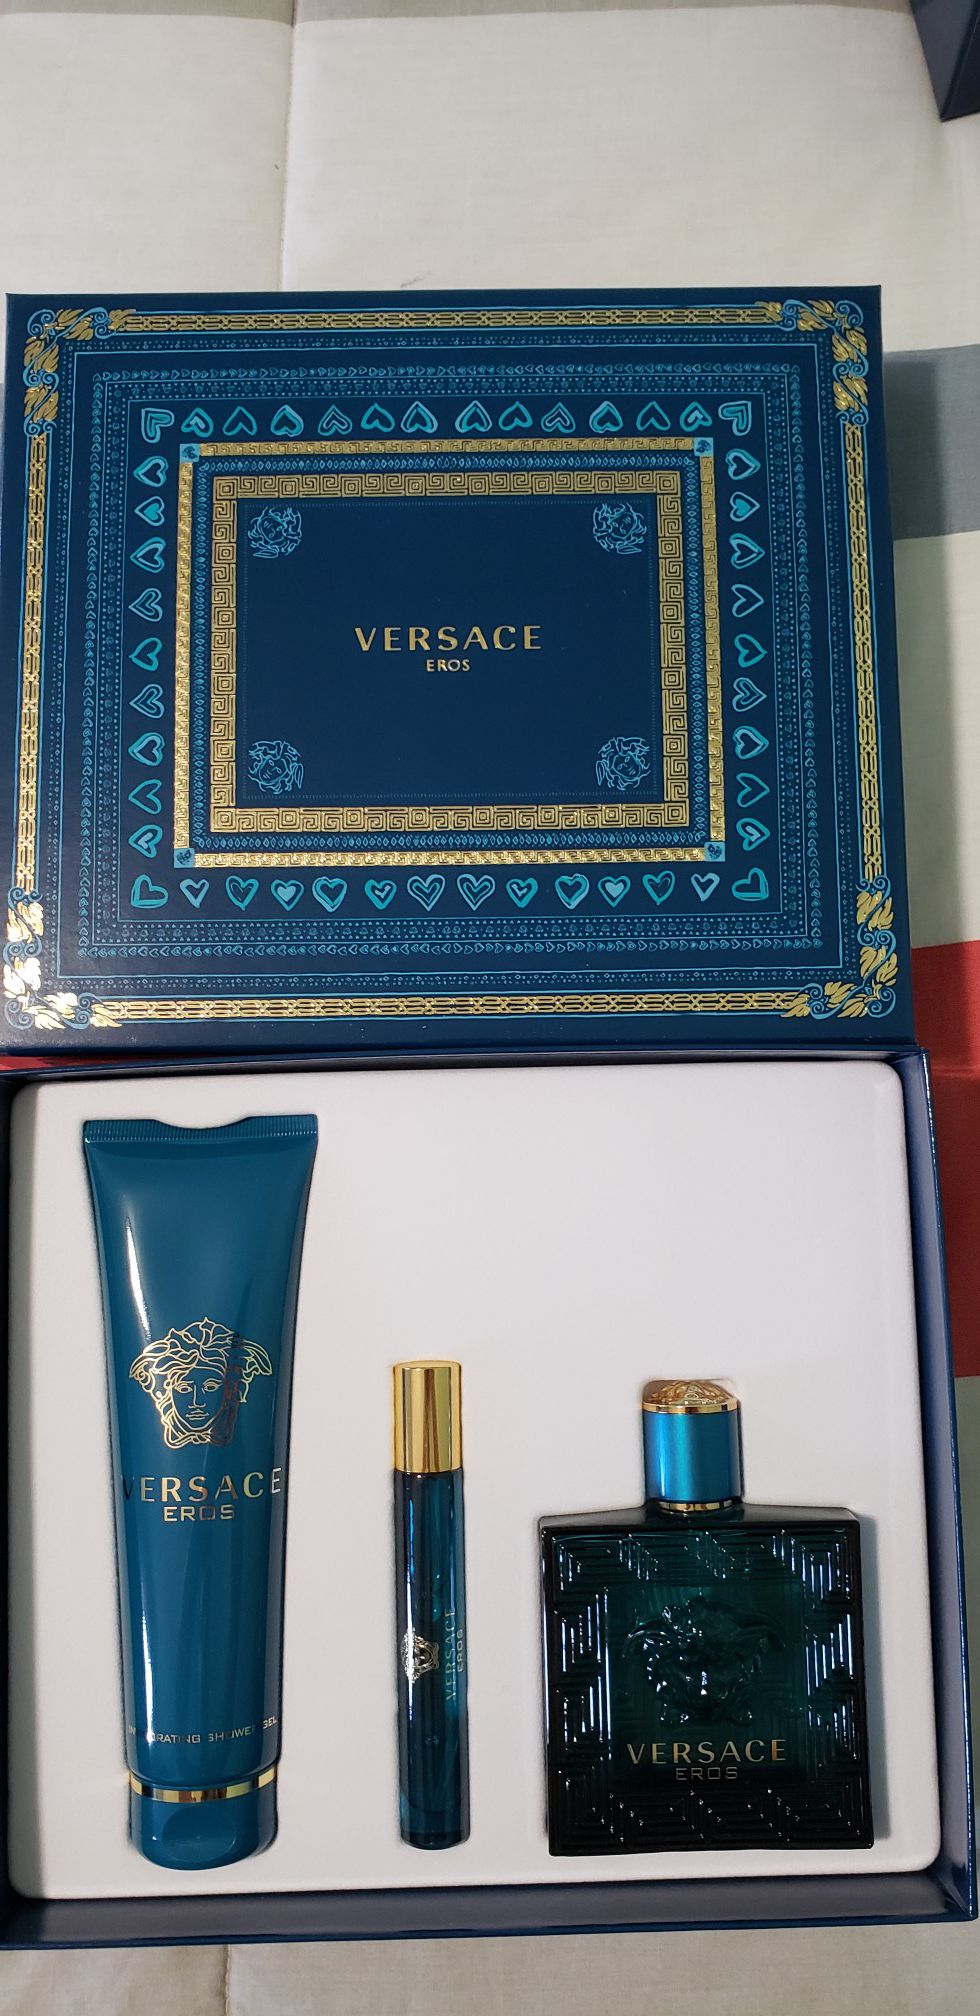 Versace Eros 3.4oz set $75$ firm